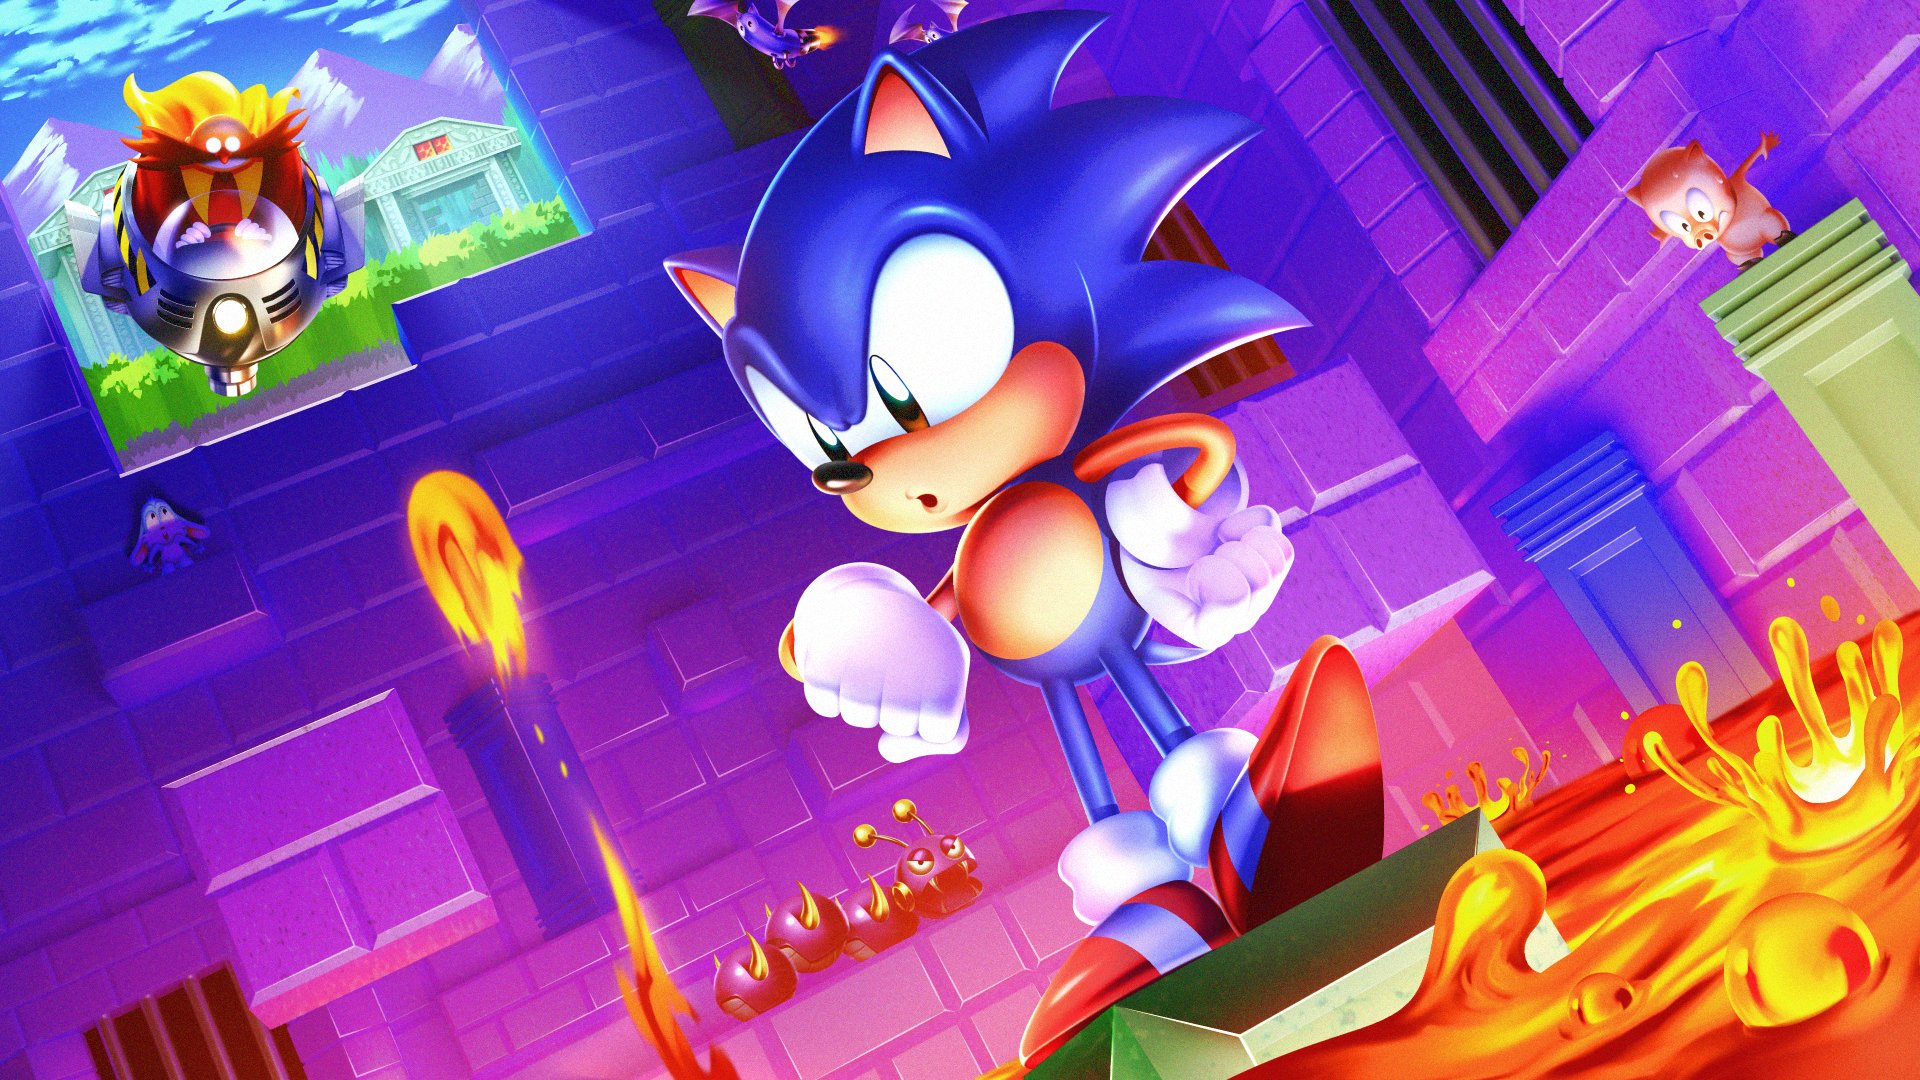 Sonic the Hedgehog (@sonic_hedgehog) / X